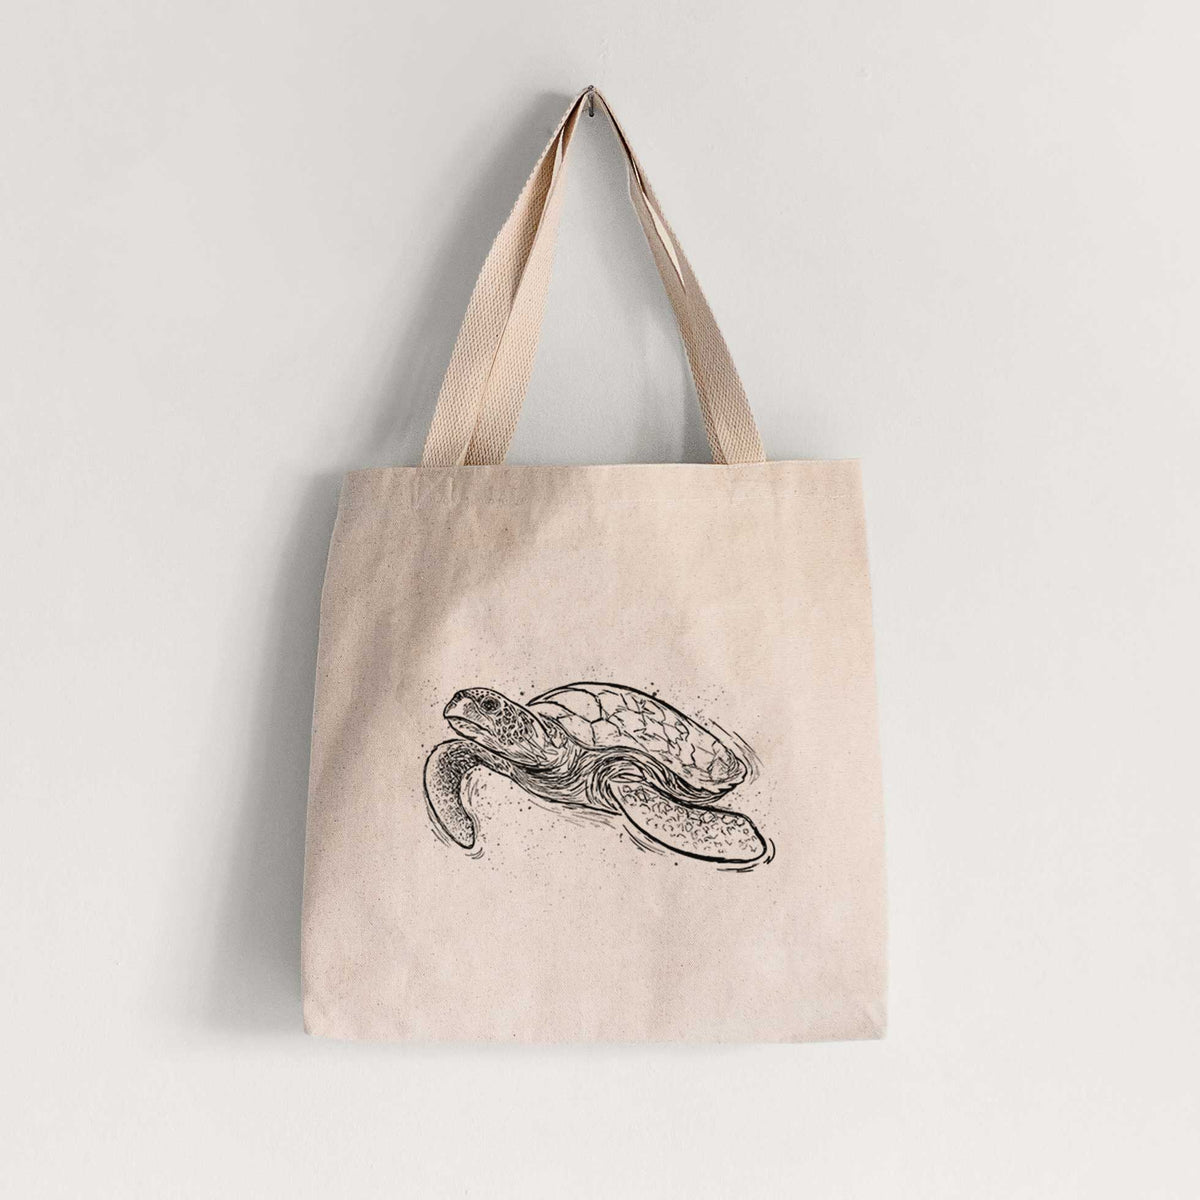 Hawksbill Sea Turtle - Eretmochelys imbricata - Tote Bag